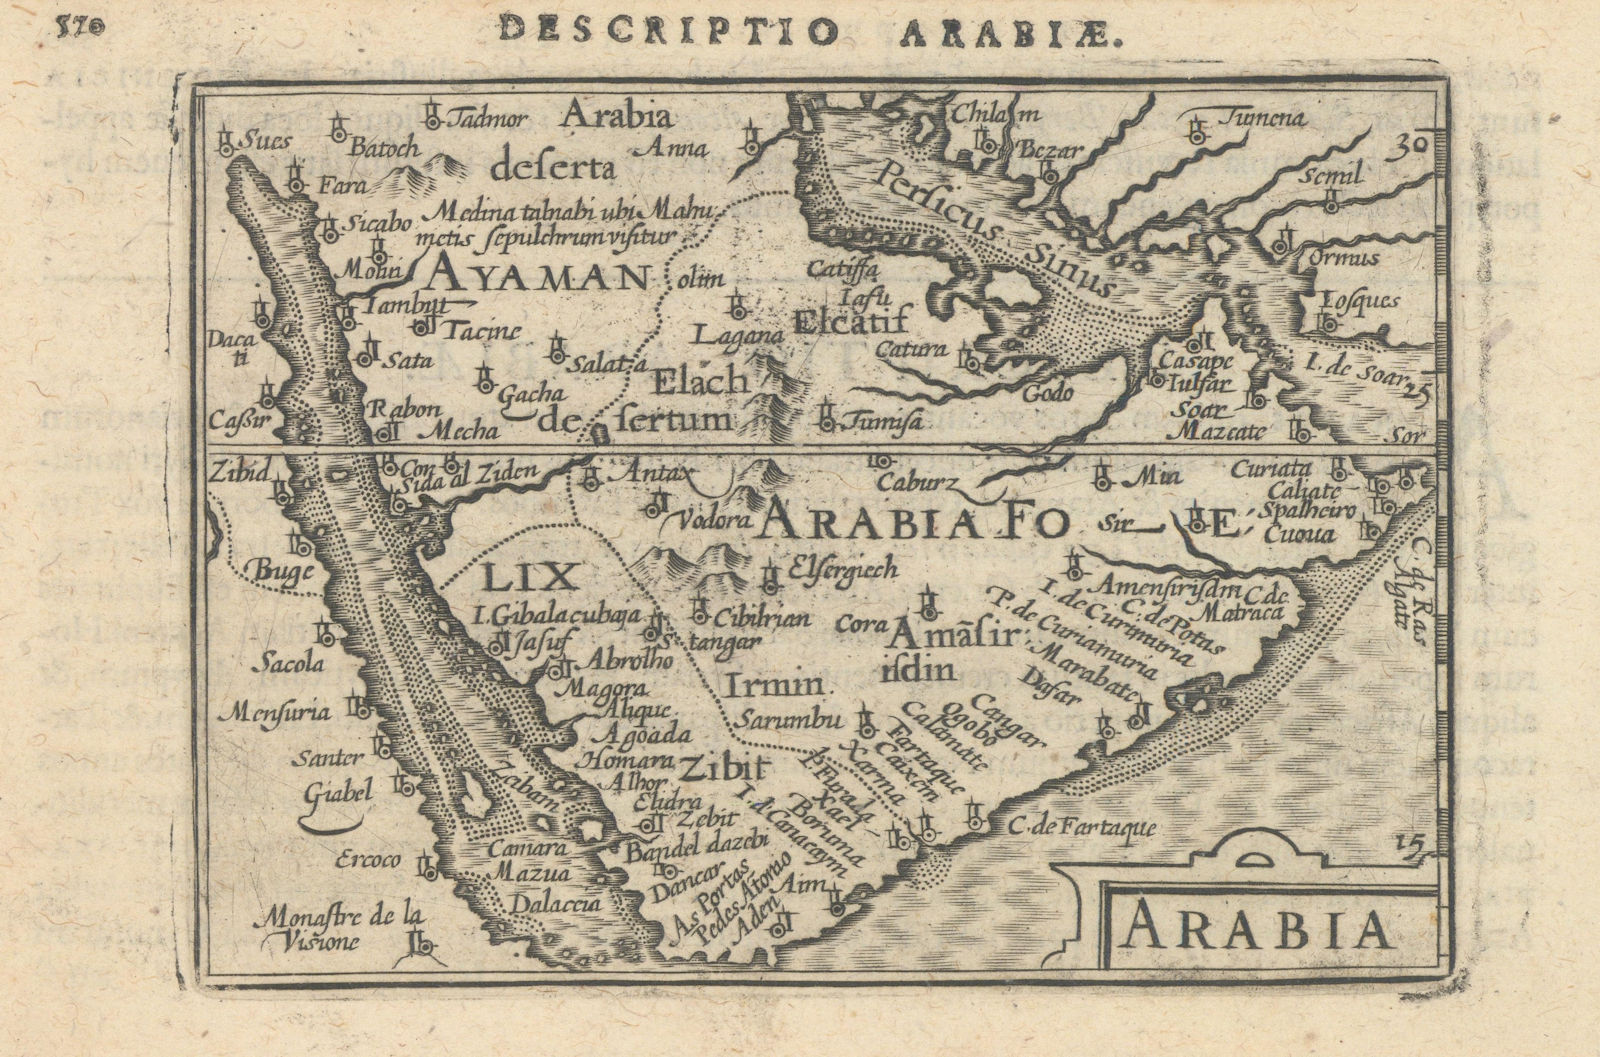 Arabiae / Arabia by Bertius / Langenes. Arabia Persian Gulf Red Sea 1603 map